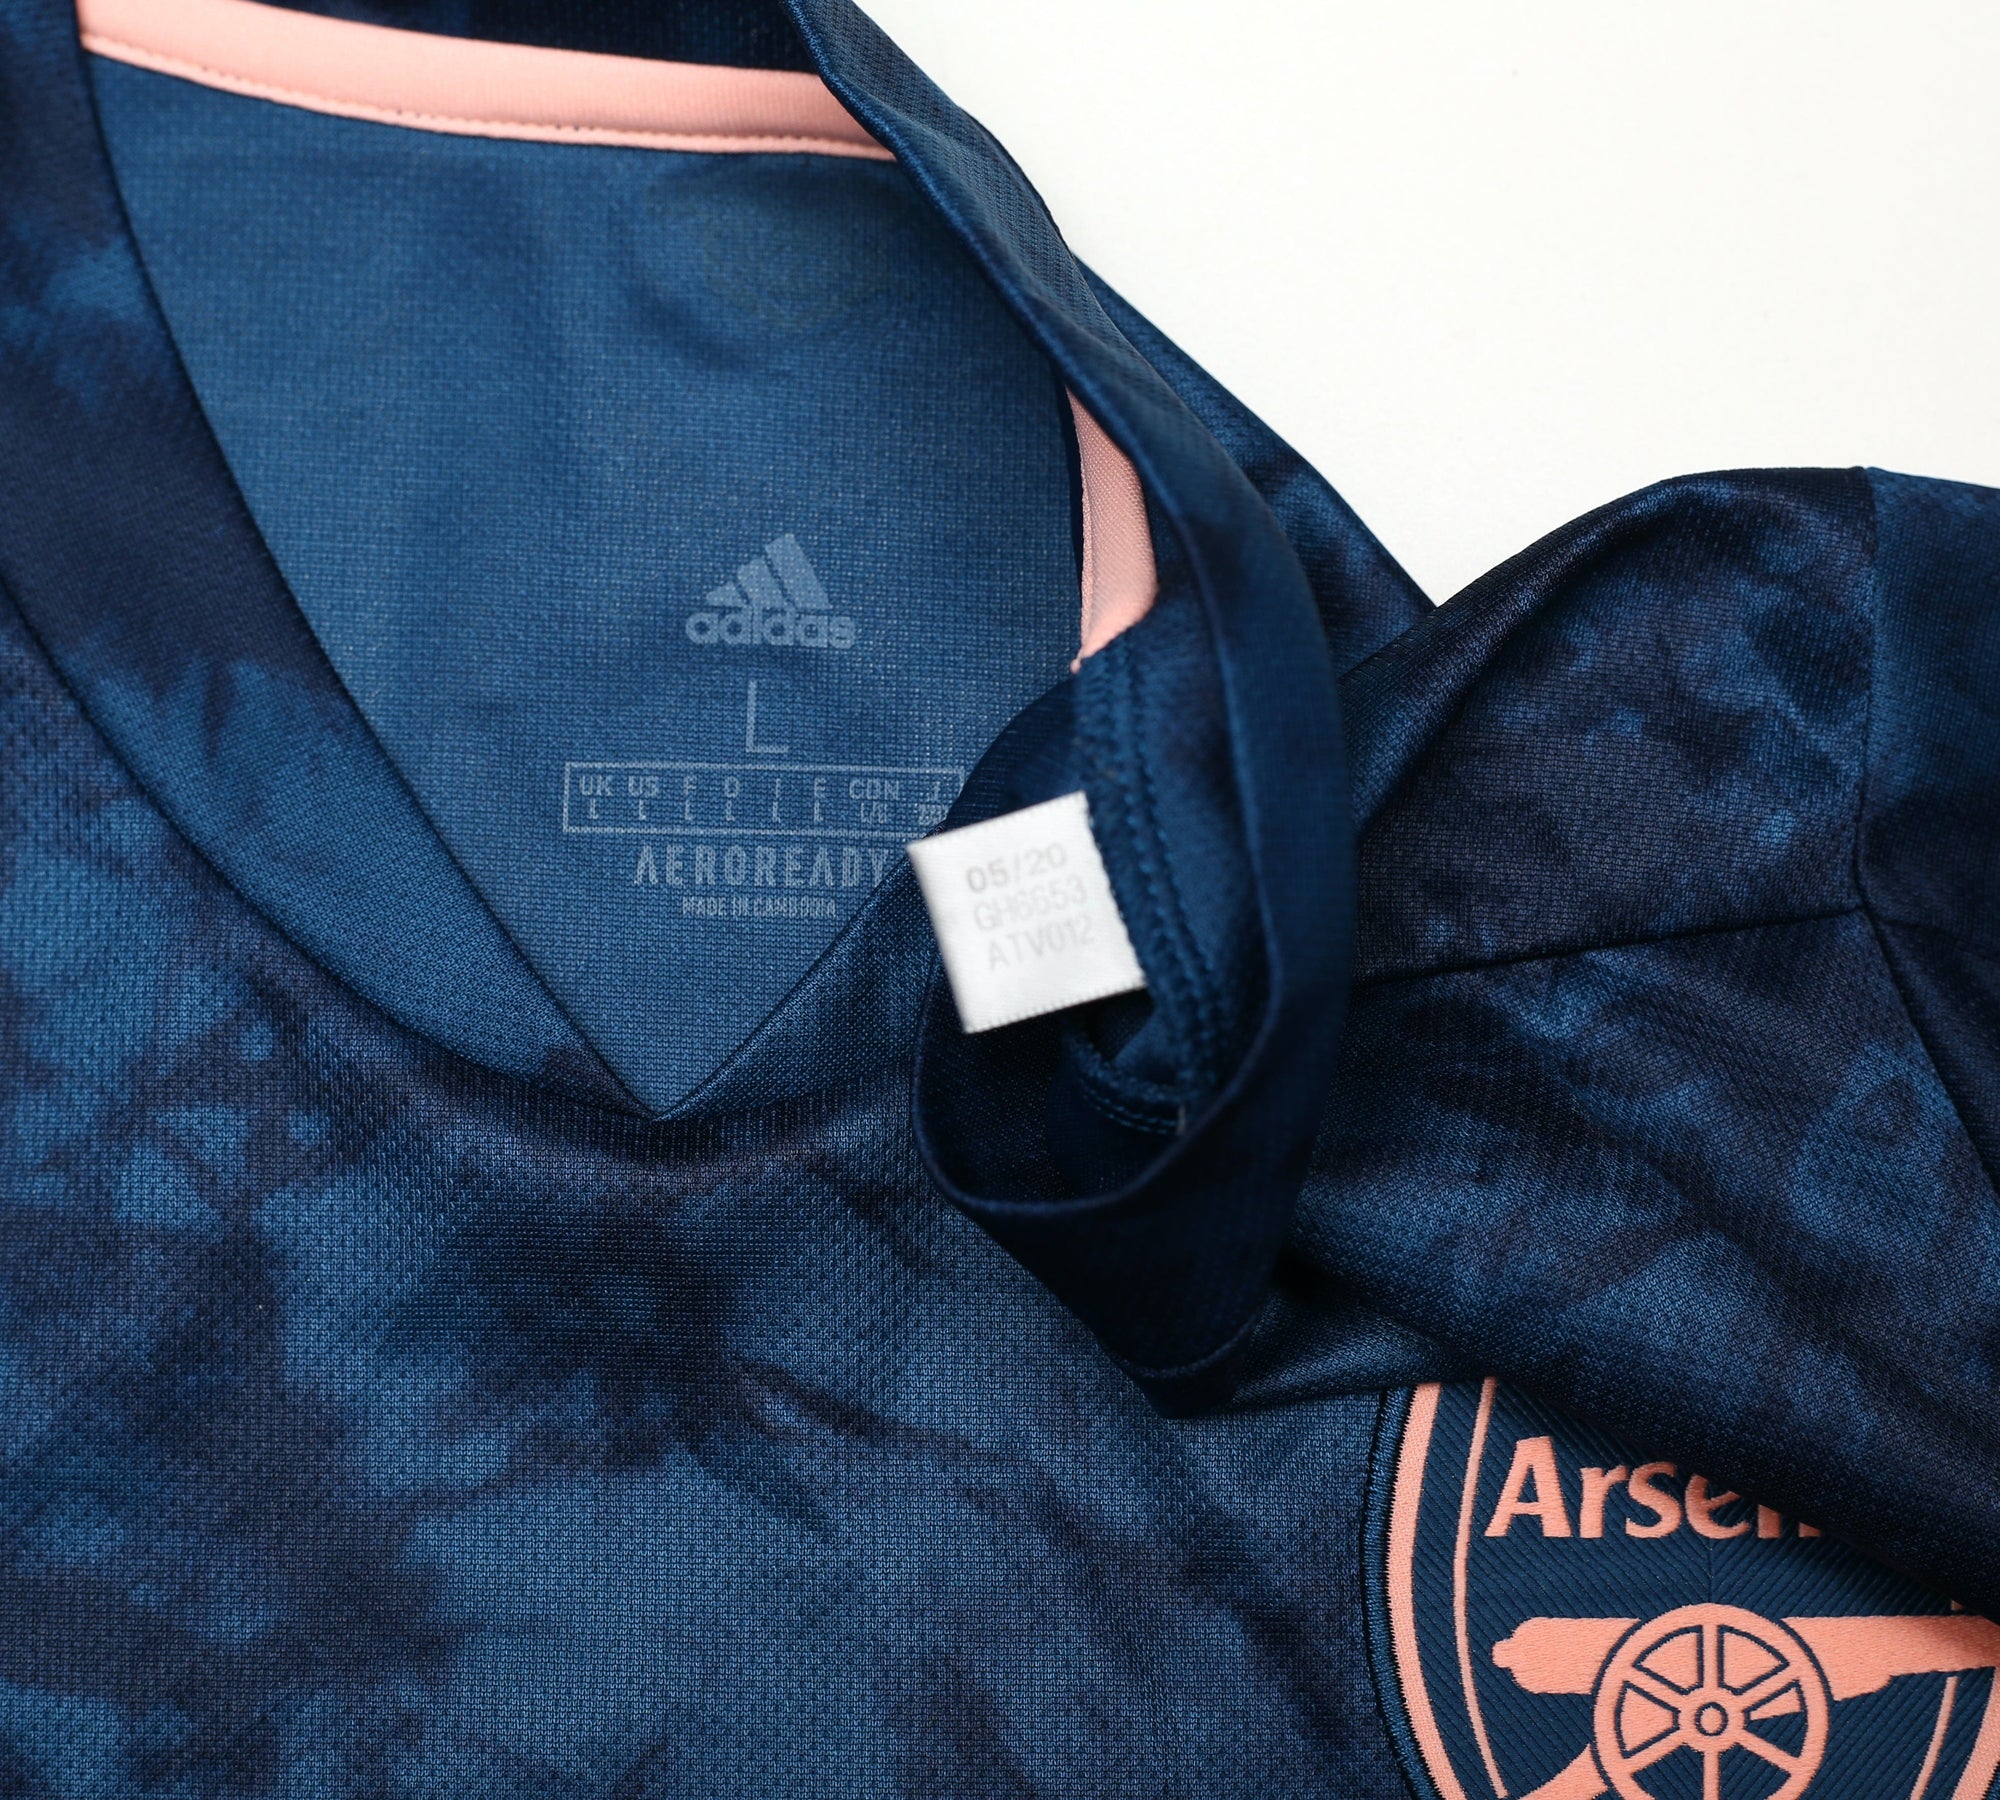 2020/21 SAKA #7 Arsenal Adidas Third Football Shirt (L)